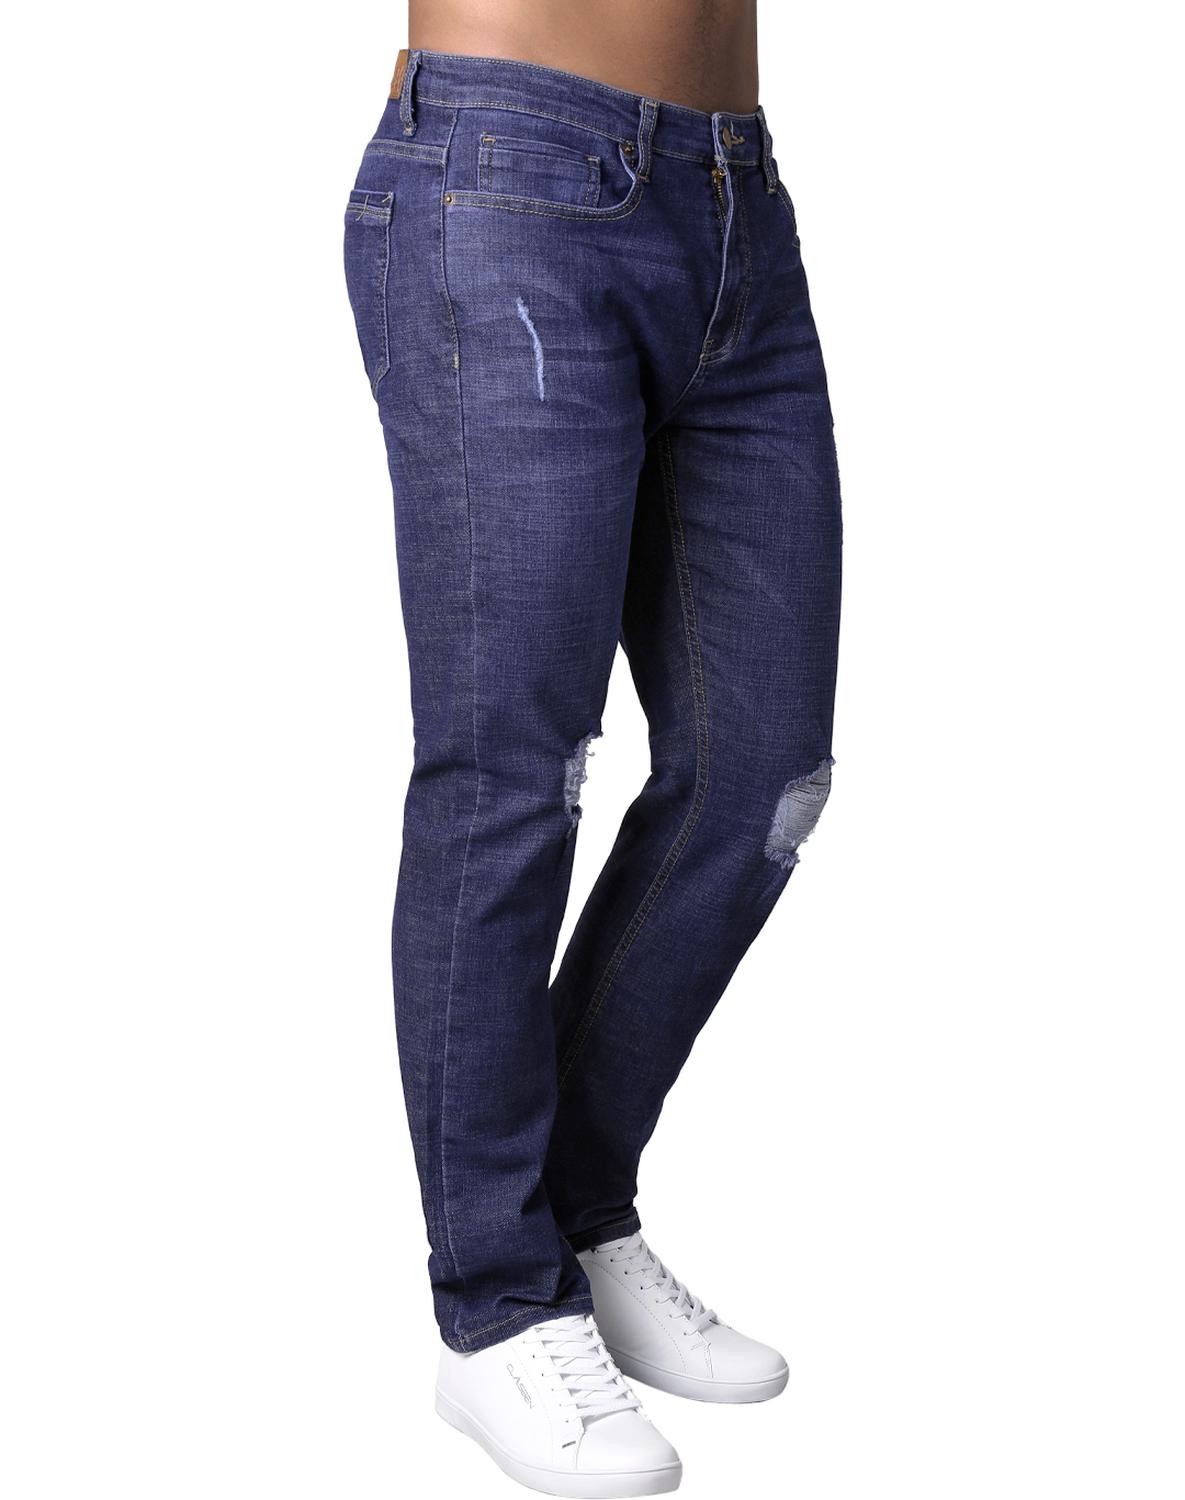 Jeans Moda Slim Hombre Azul Stfashion Ryan 63104424